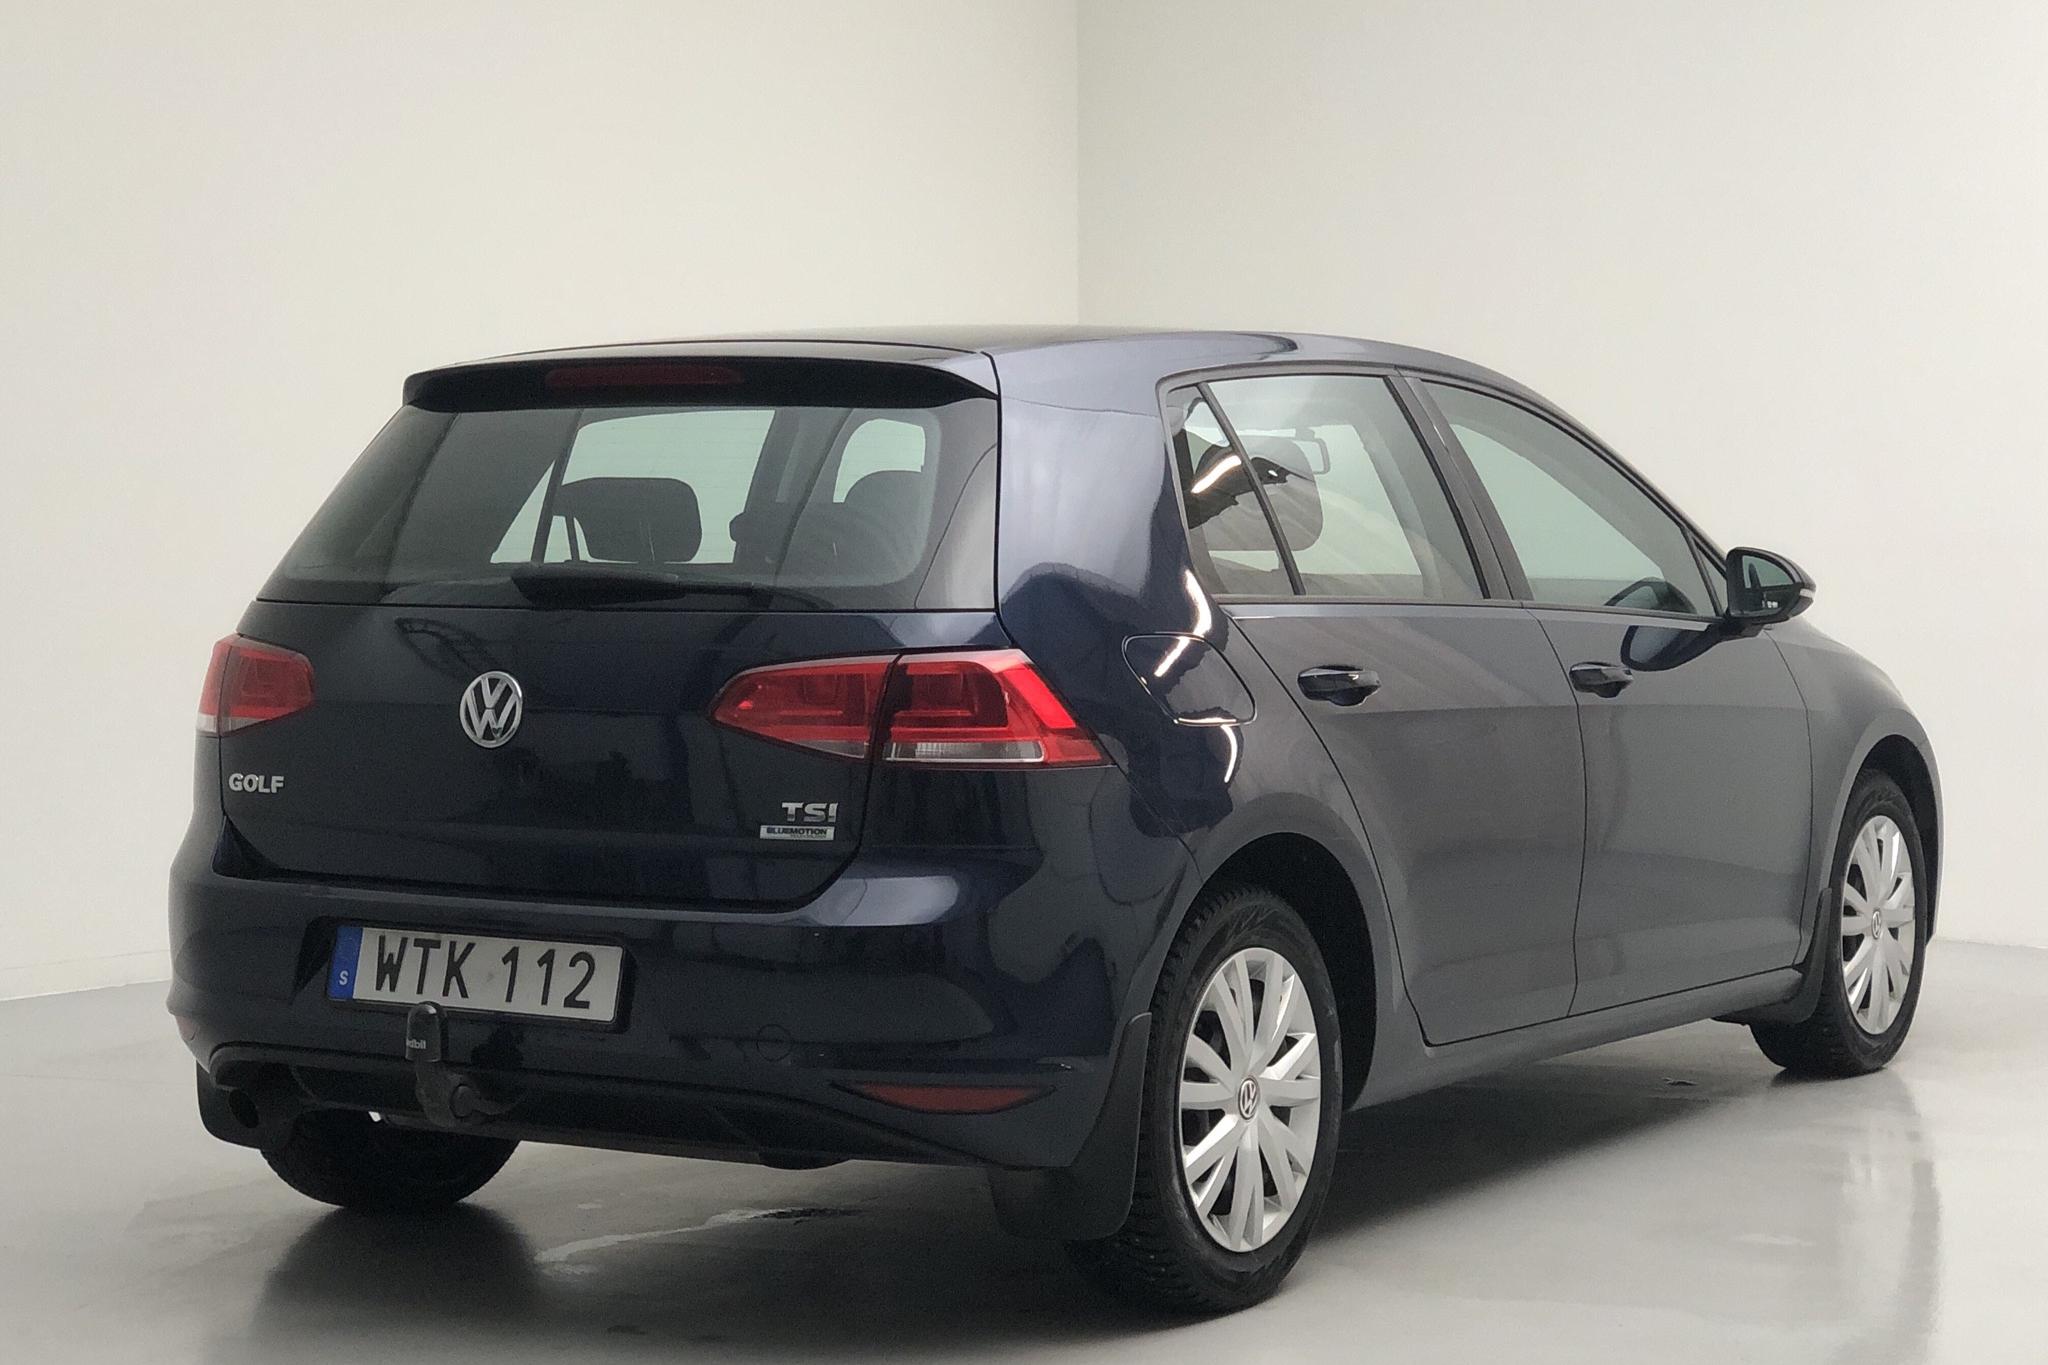 VW Golf VII 1.2 TSI 5dr (110hk) - 123 290 km - Manual - Dark Blue - 2016